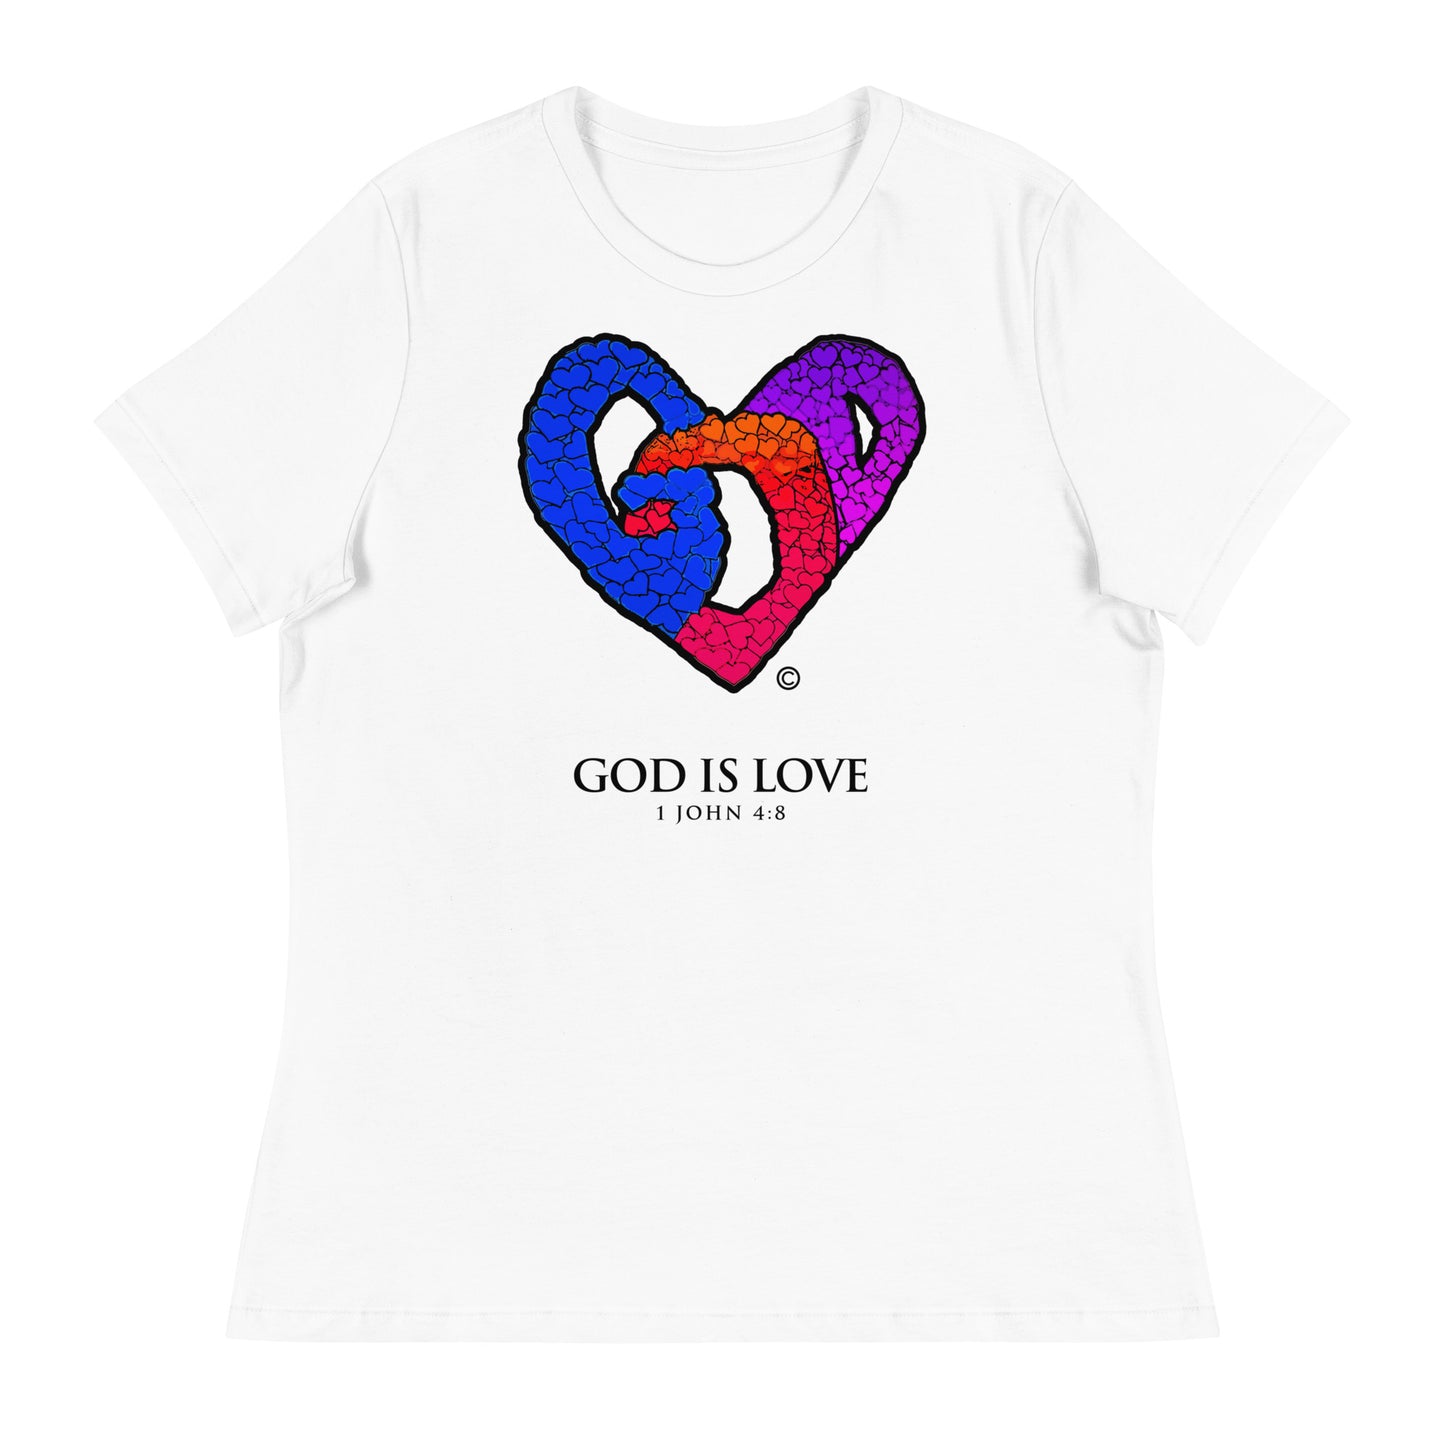 God is Love Women's Relaxed T-Shirt